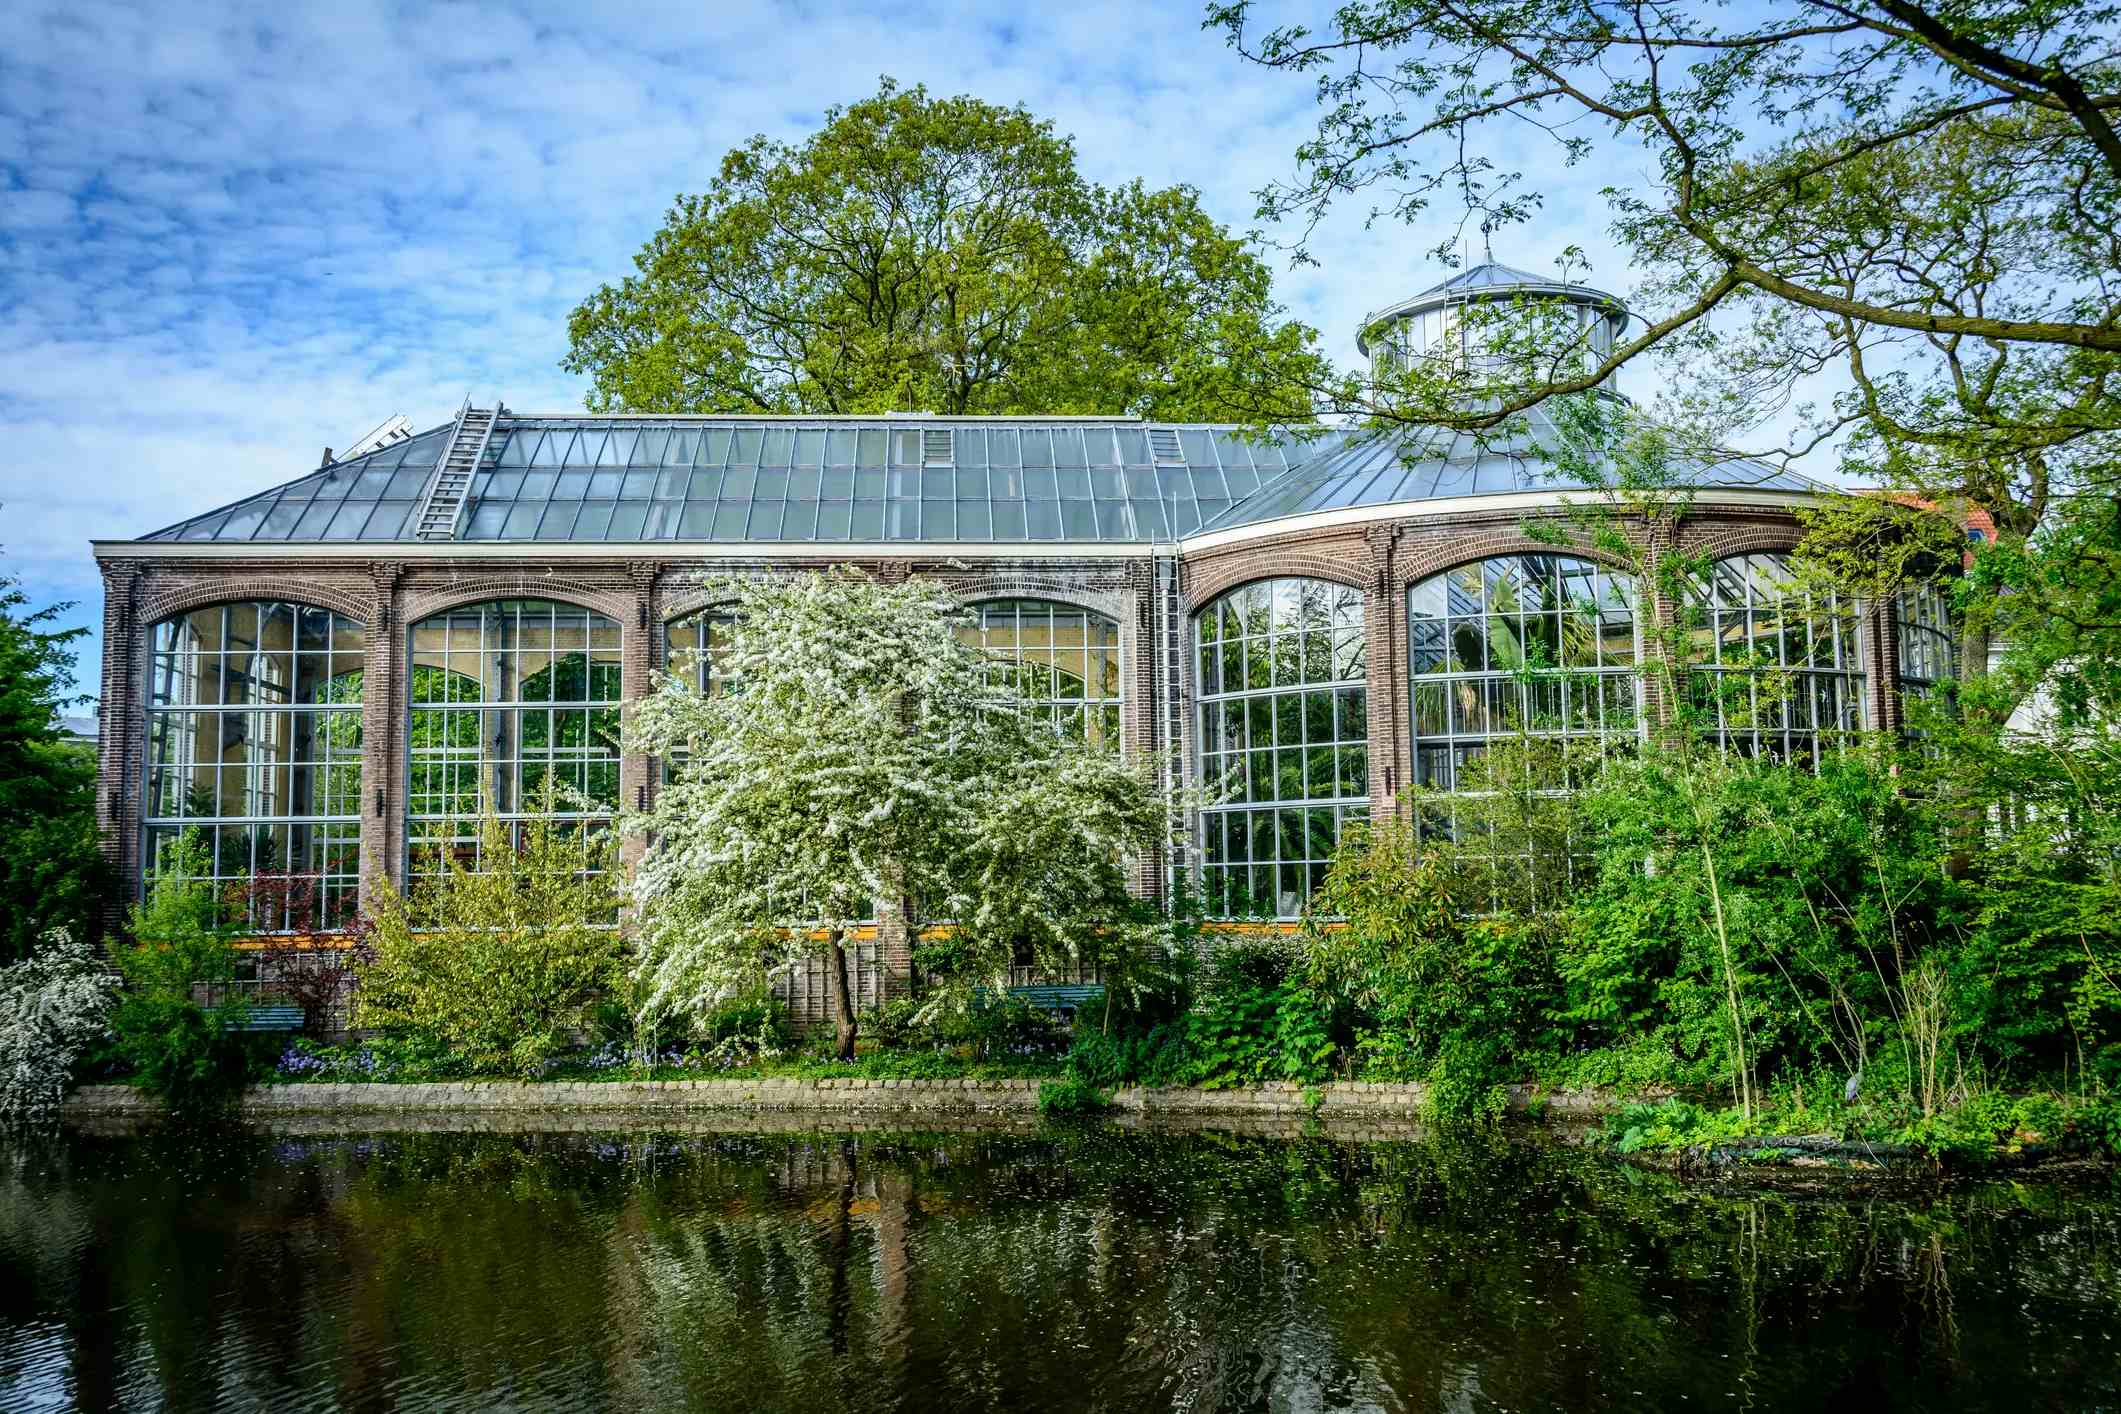 Hortus Botanicus de Ámsterdam image